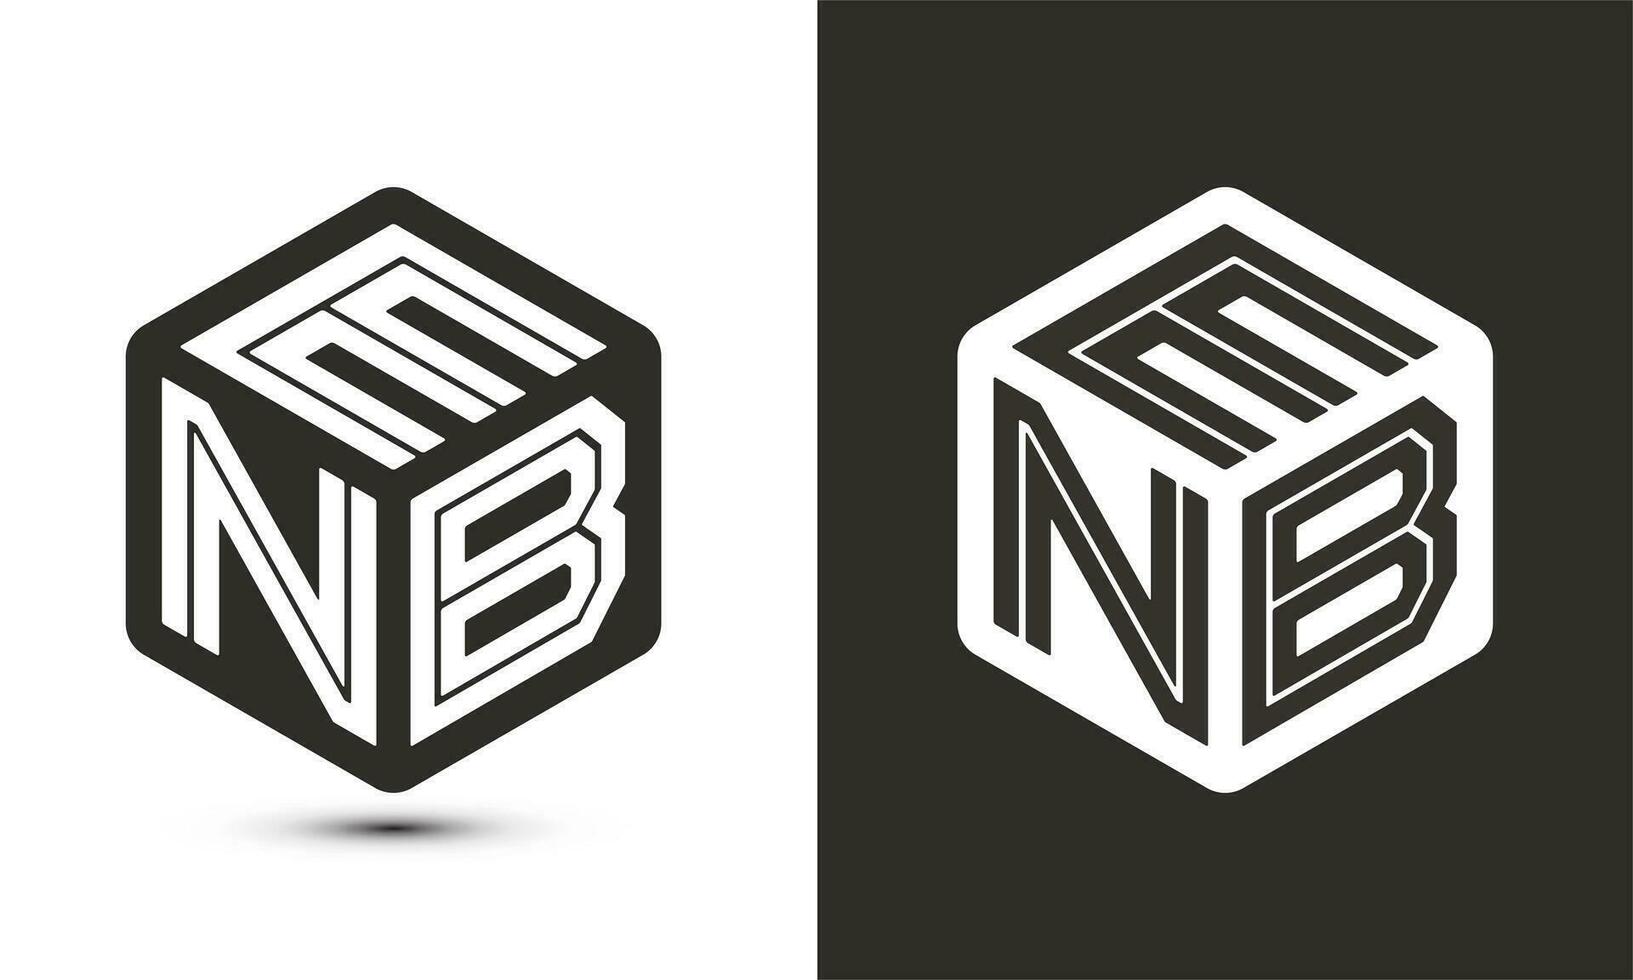 enb letra logo diseño con ilustrador cubo logo, vector logo moderno alfabeto fuente superposición estilo.